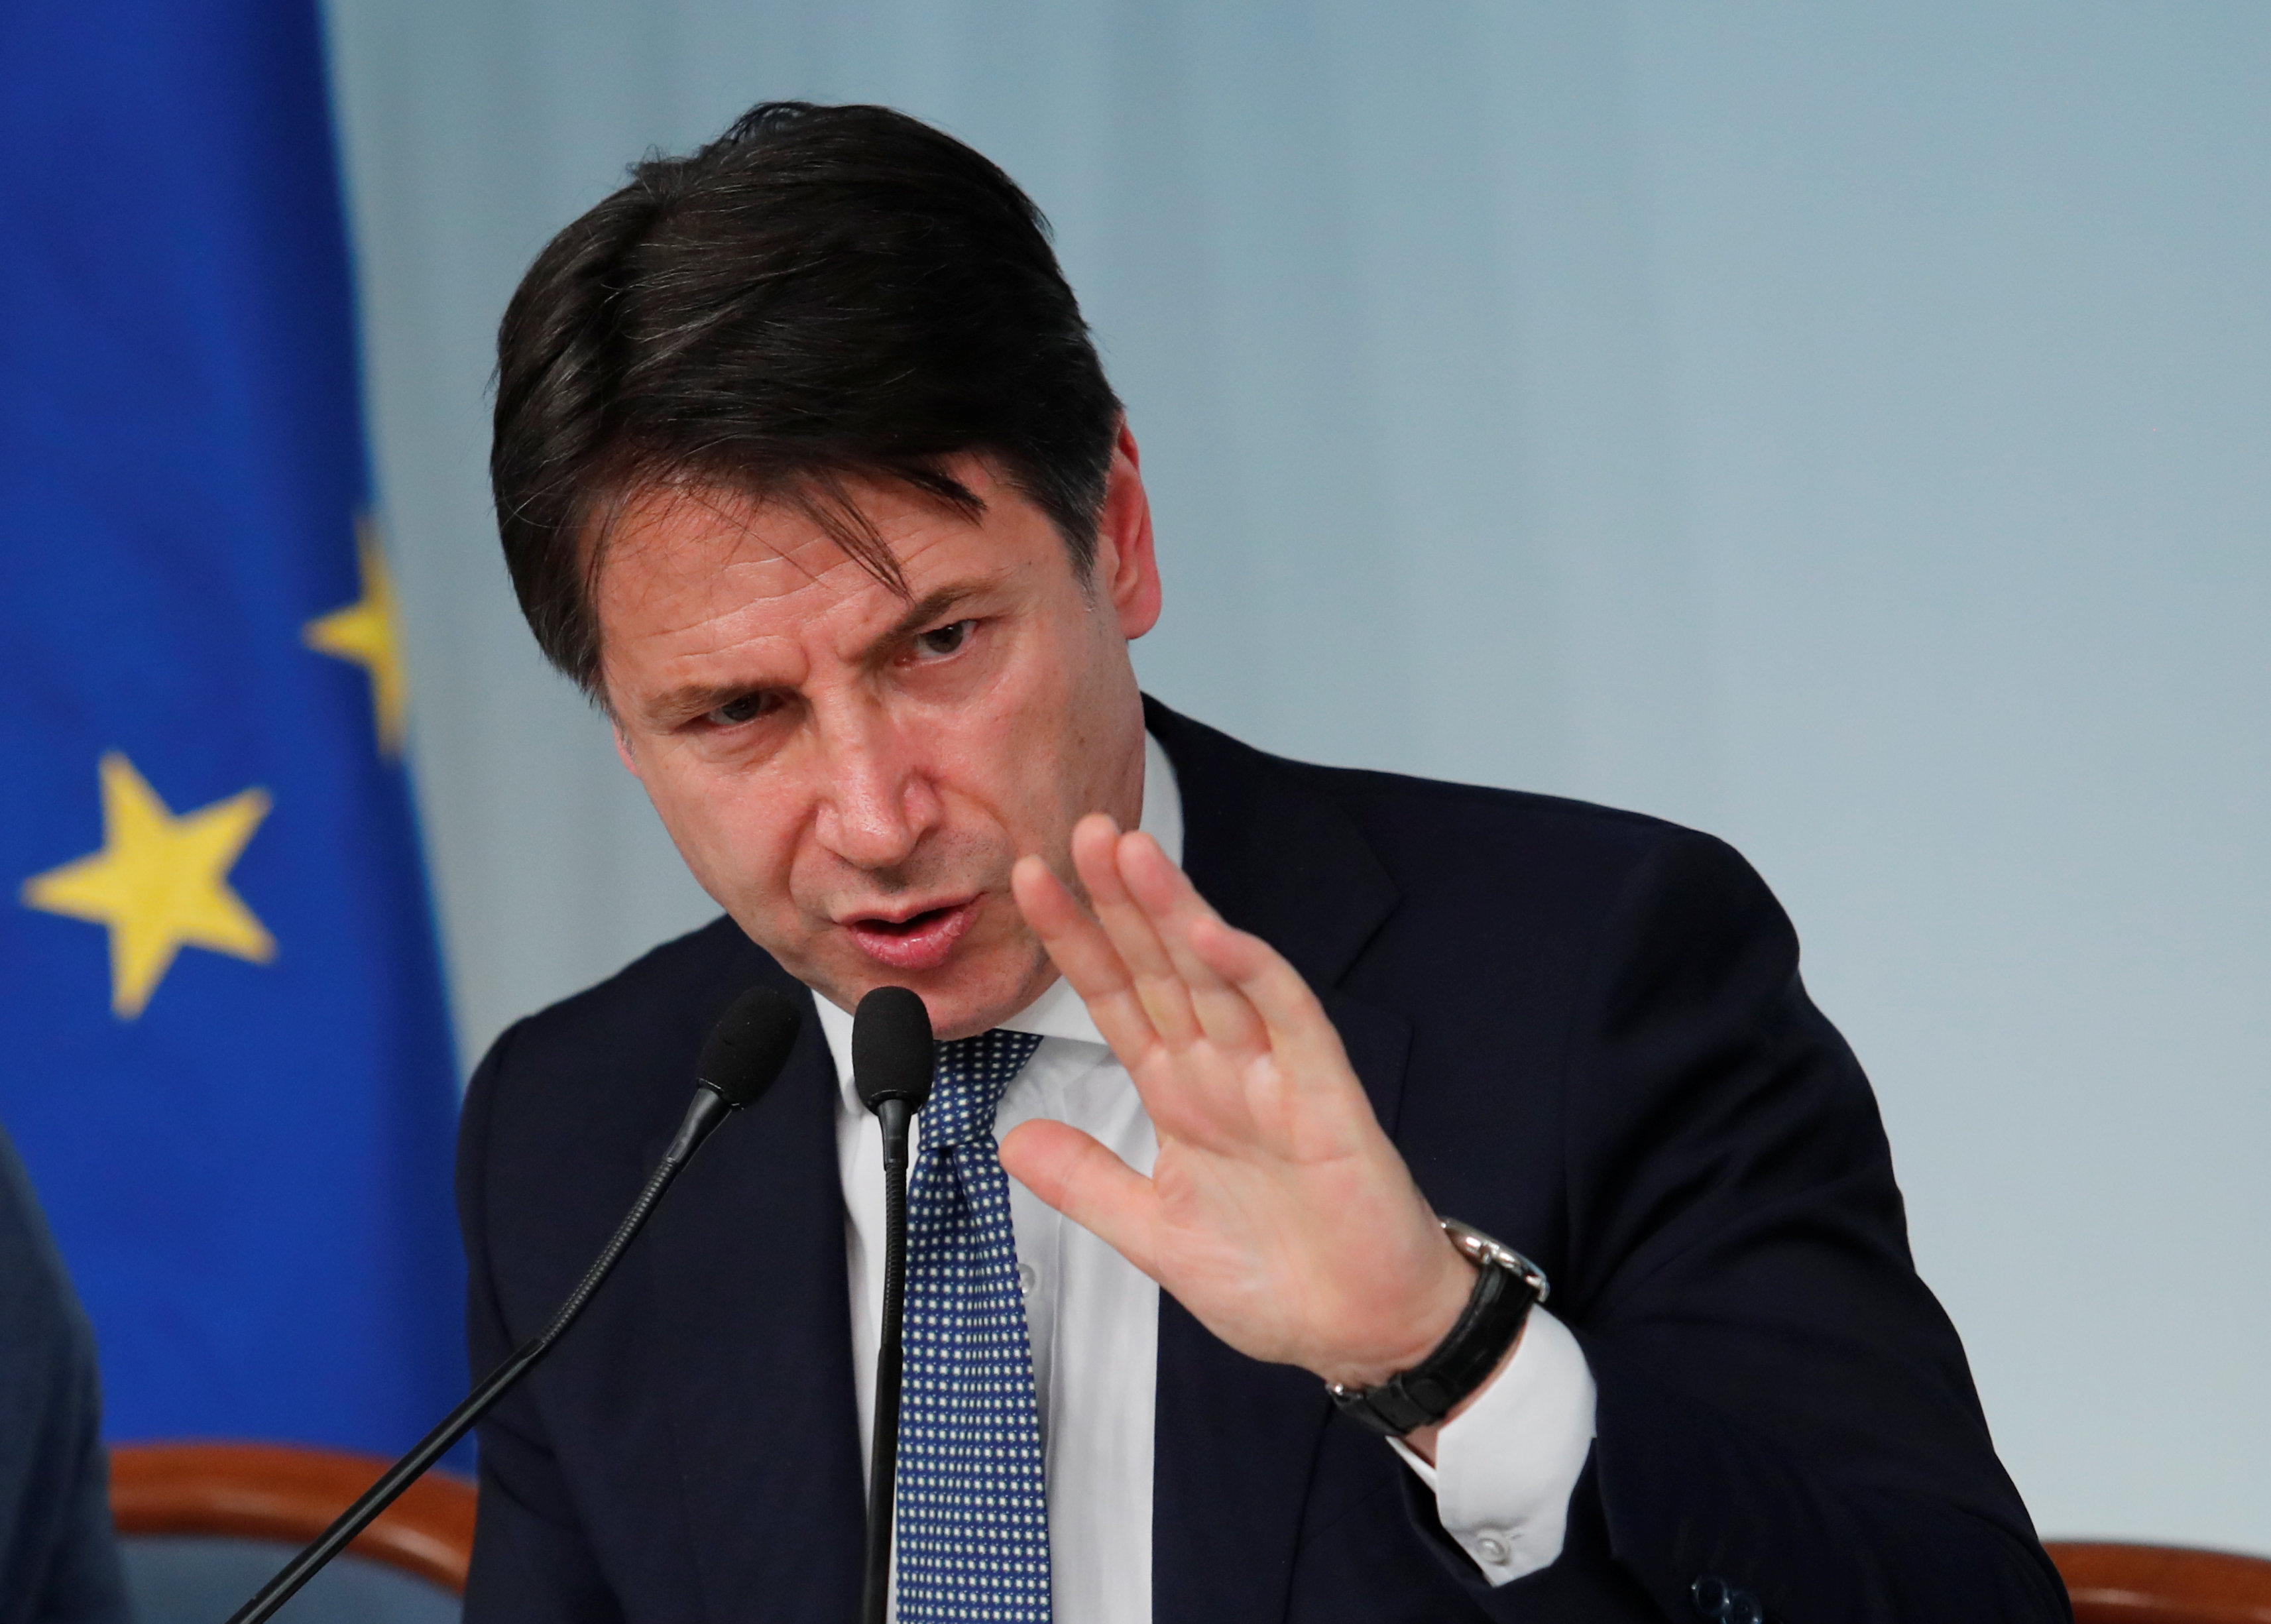 Primer ministro italiano pidió a la UE no cometer errores trágicos con el coronavirus